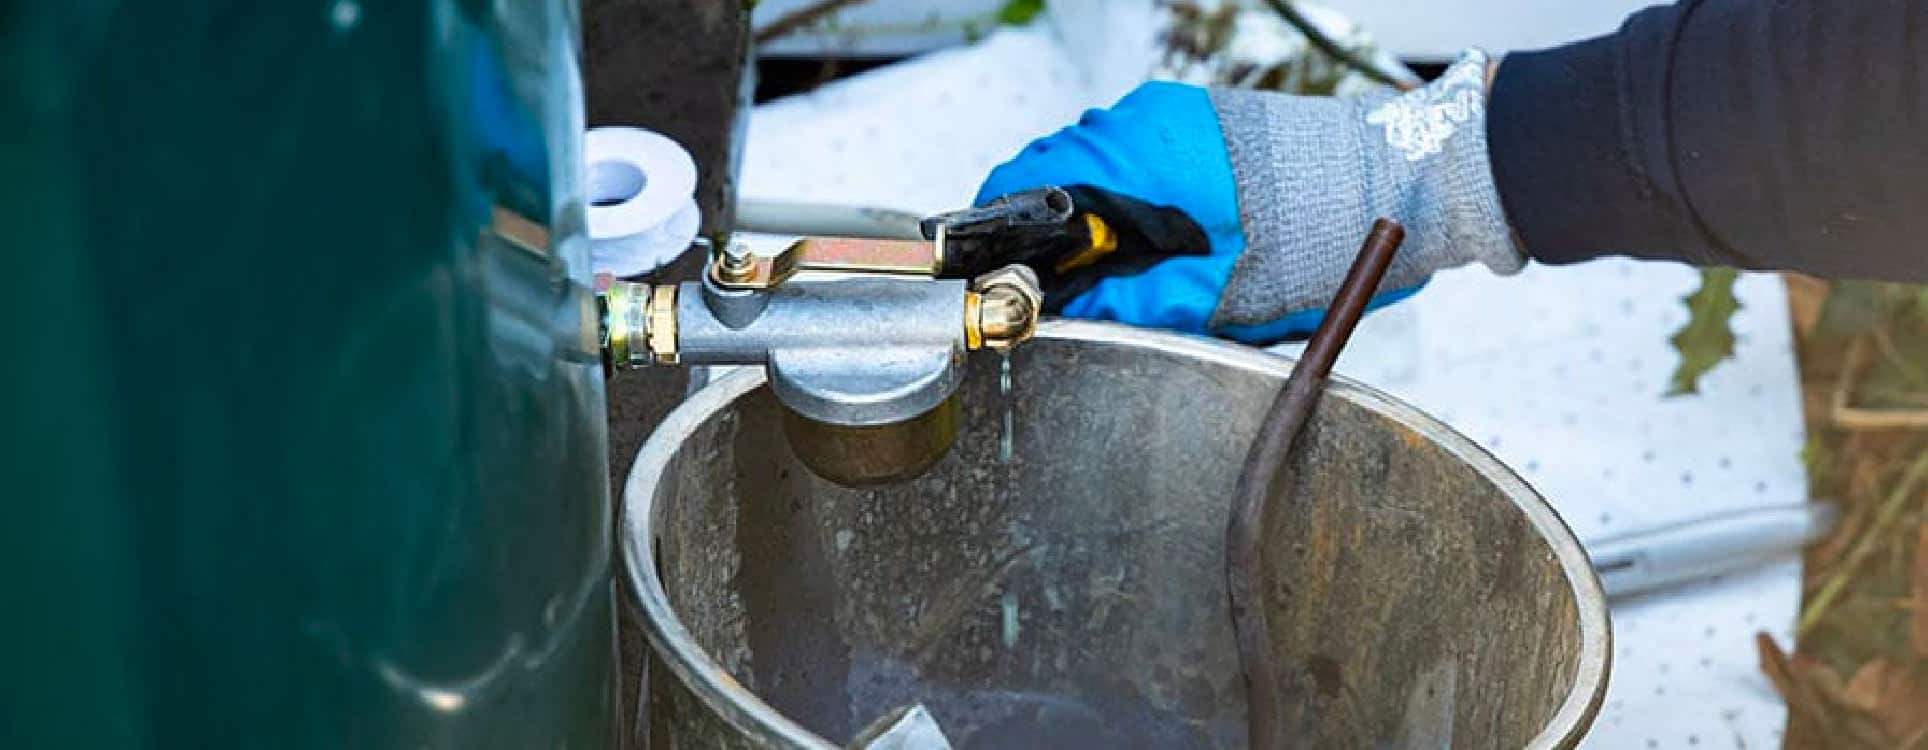 oil tank engineer draining oil tank water contamination